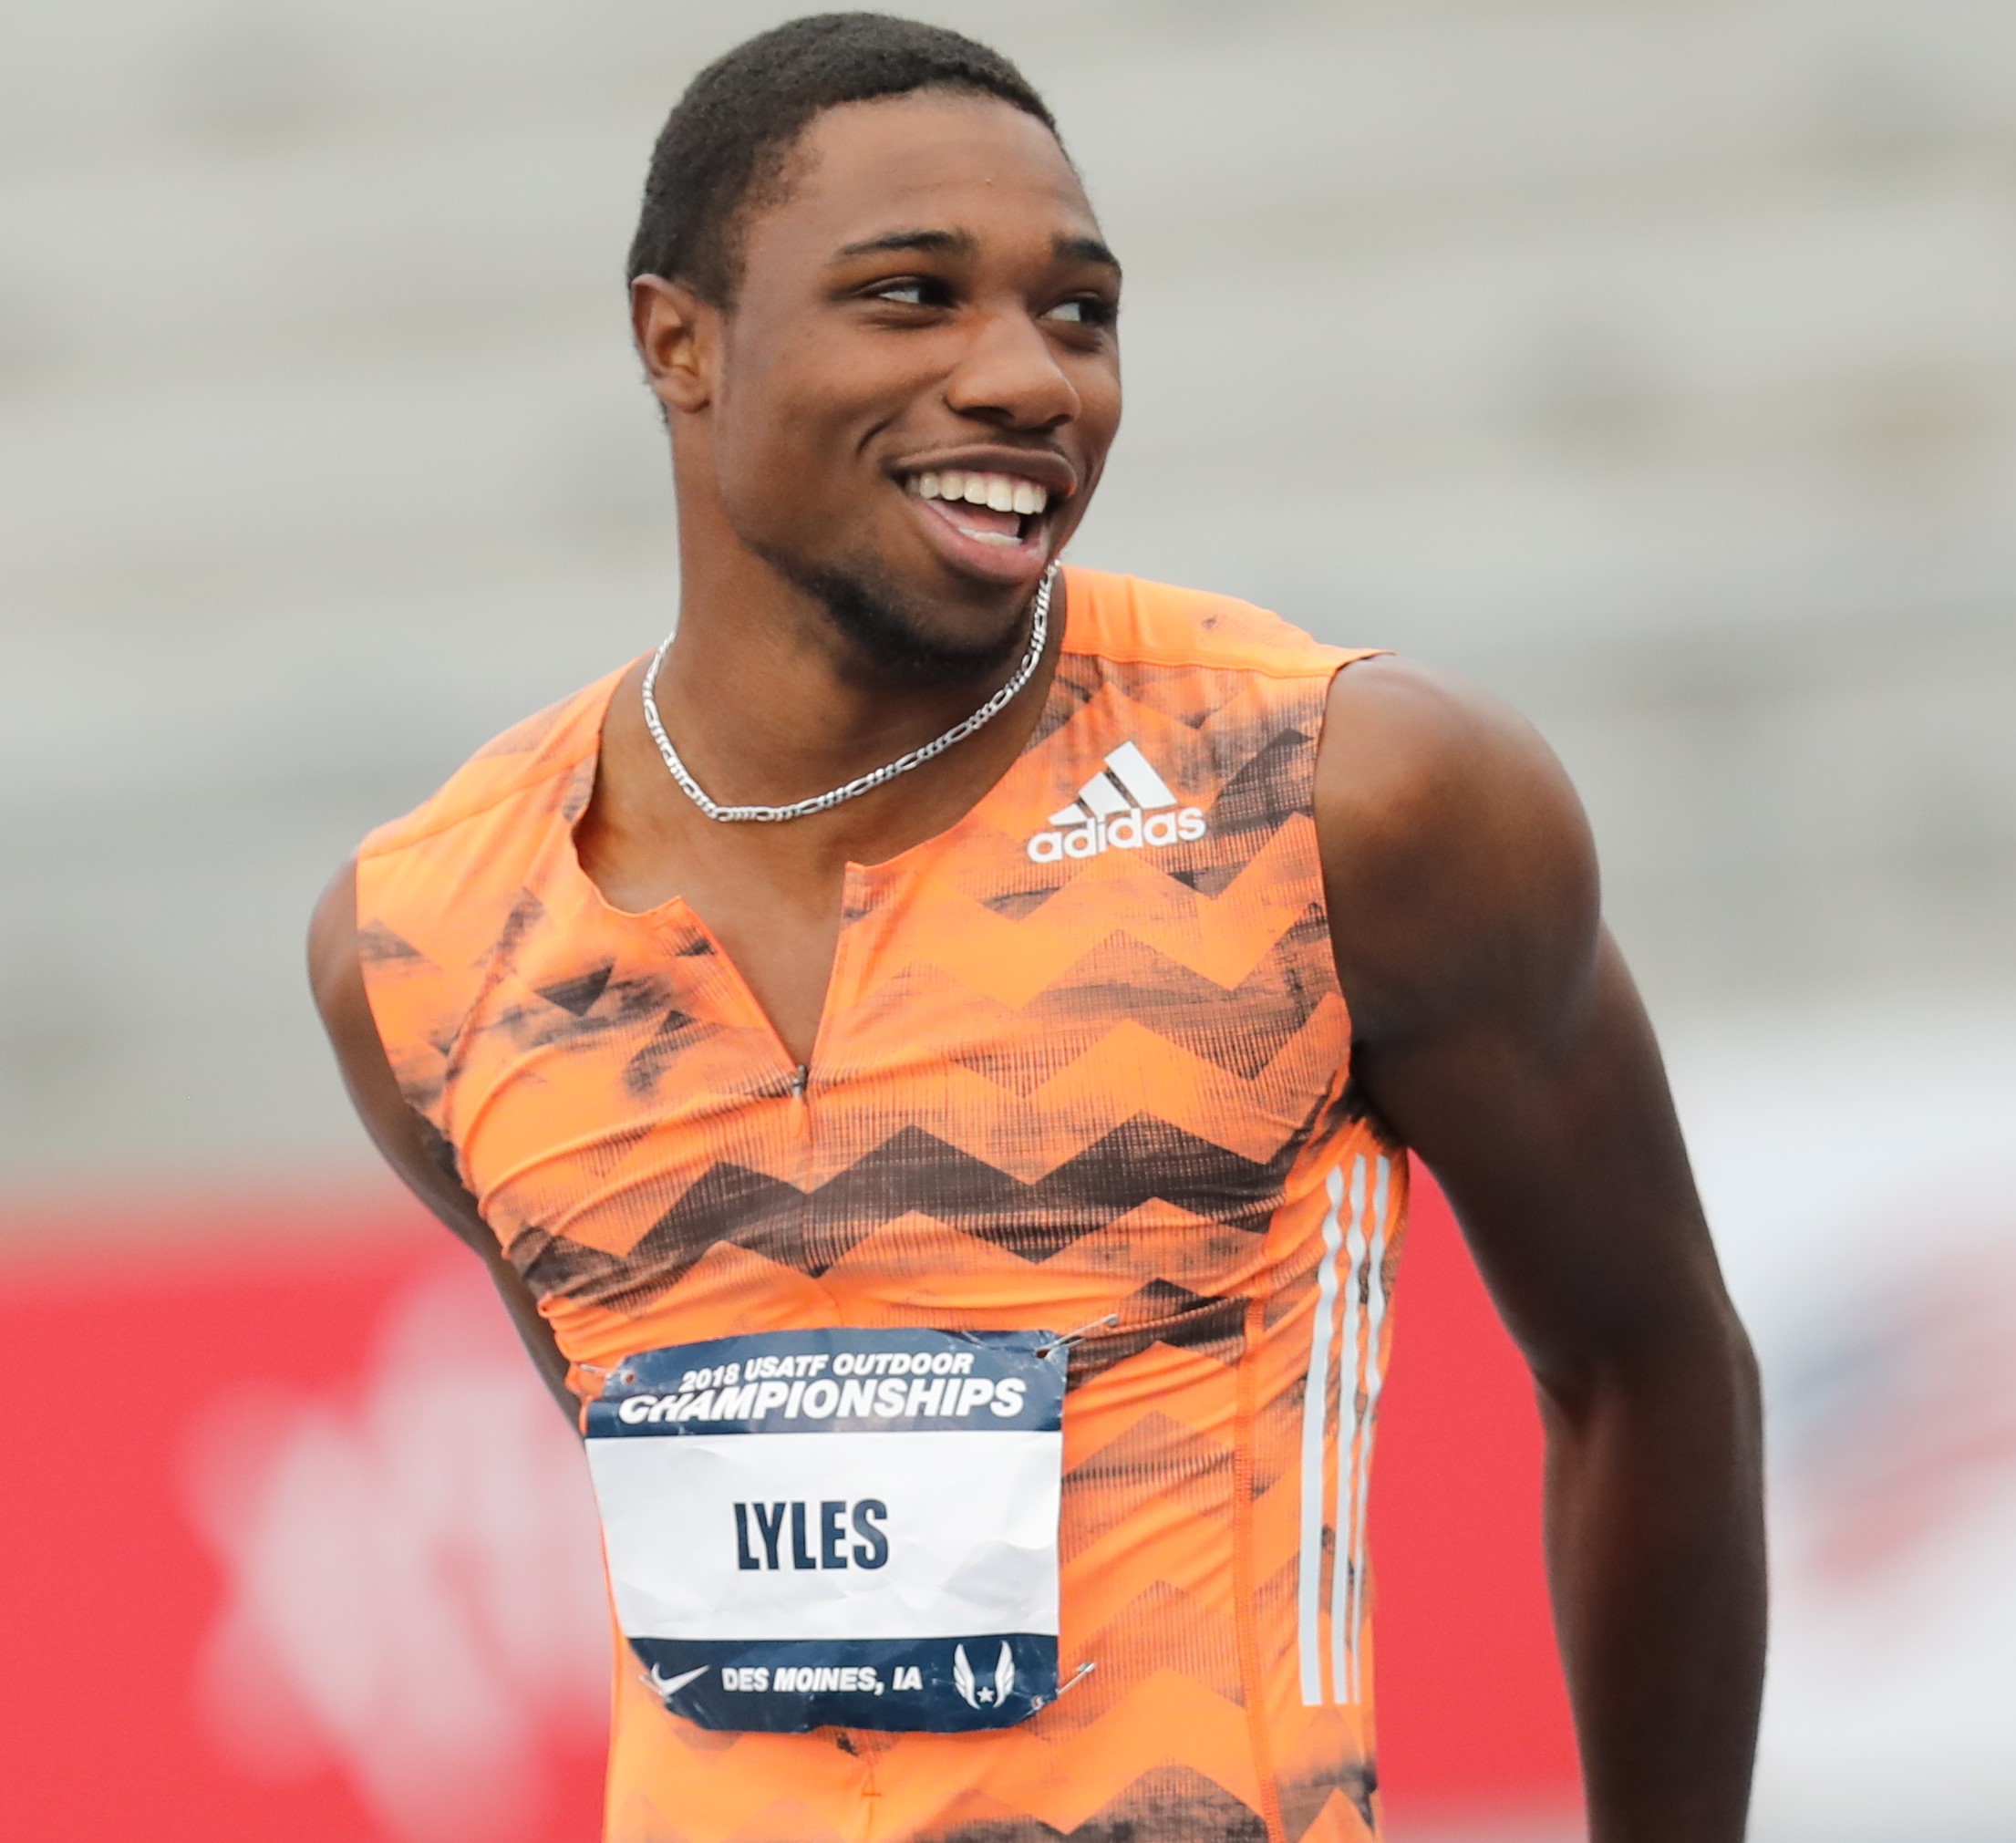 I'm not the new Bolt I am me, says 200m champion Lyles